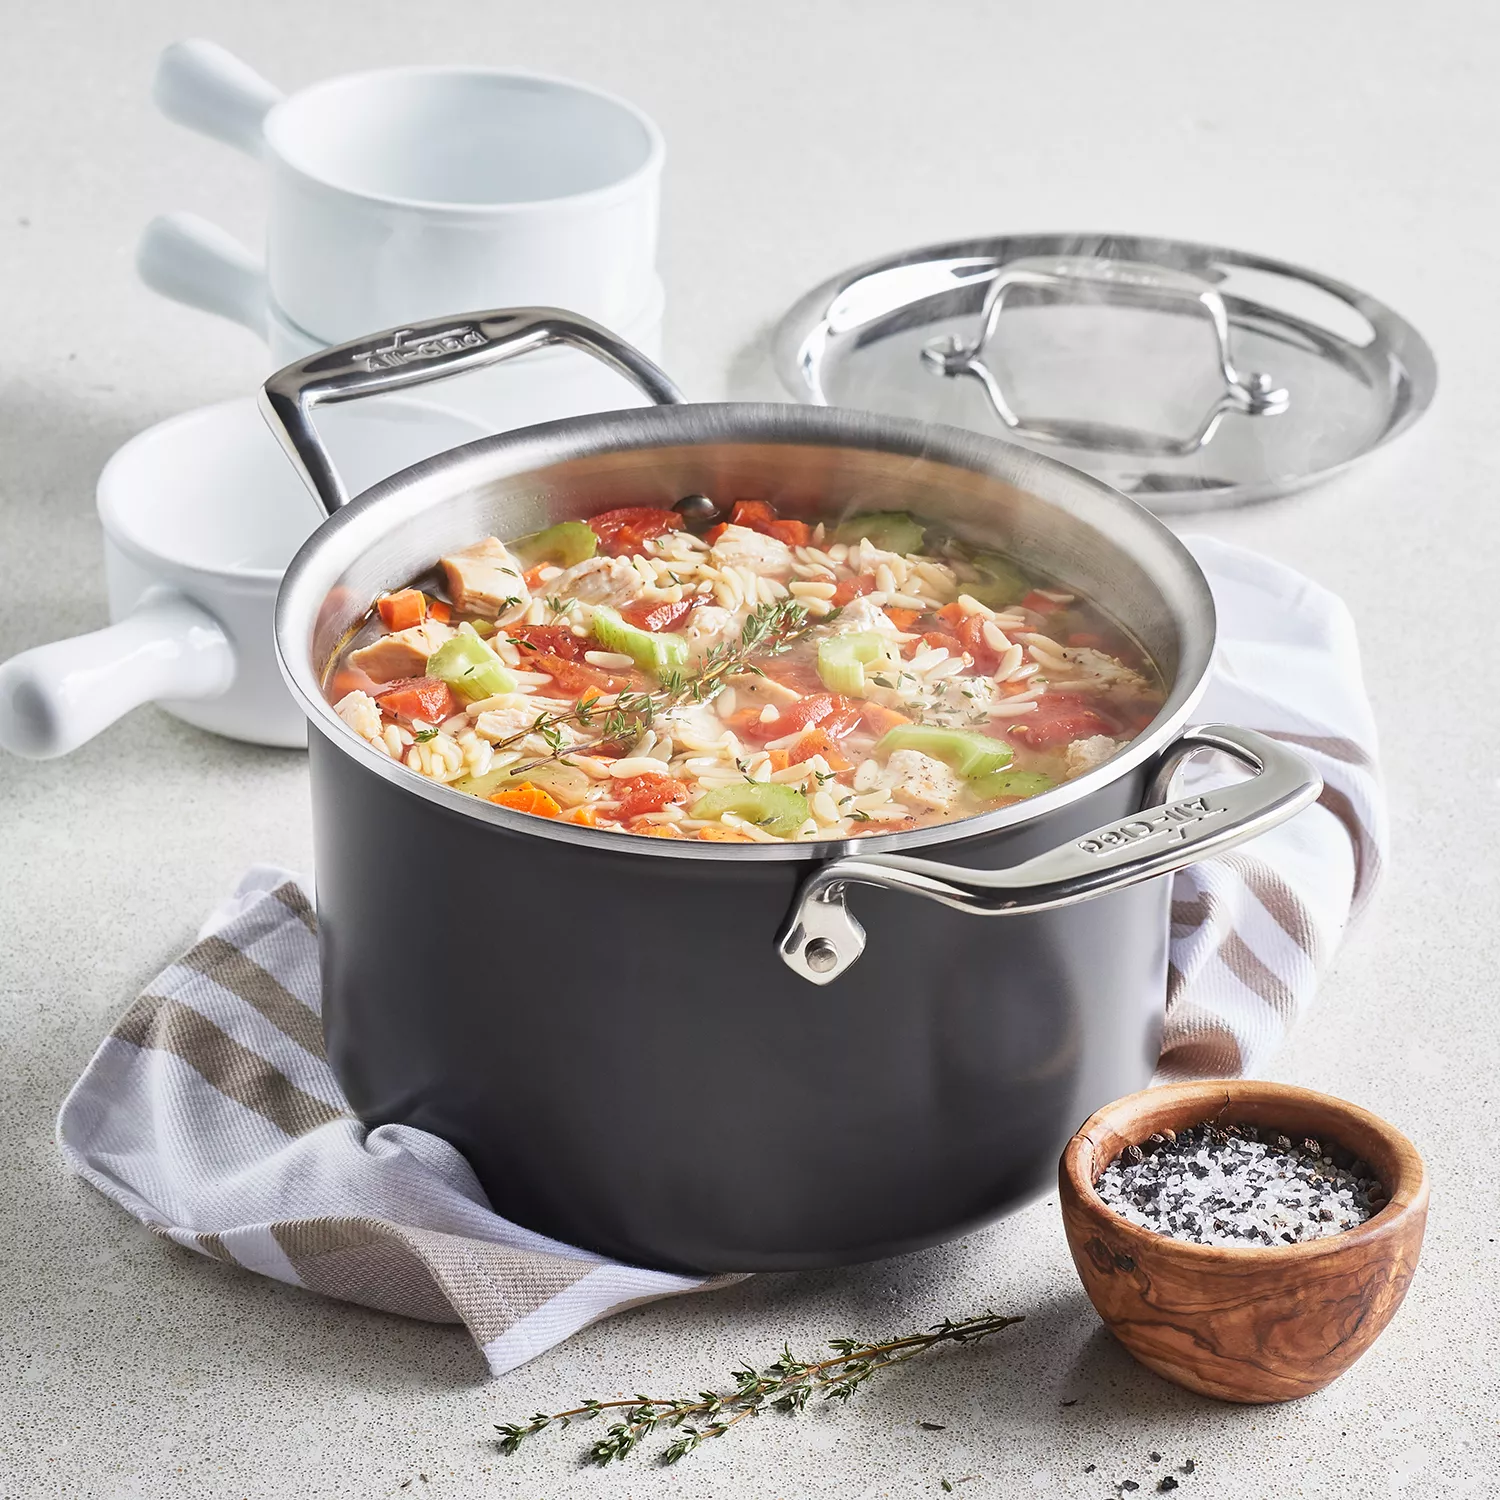 All-Clad 4-Qt Copper Core soup pot with lid and All-clad ladle